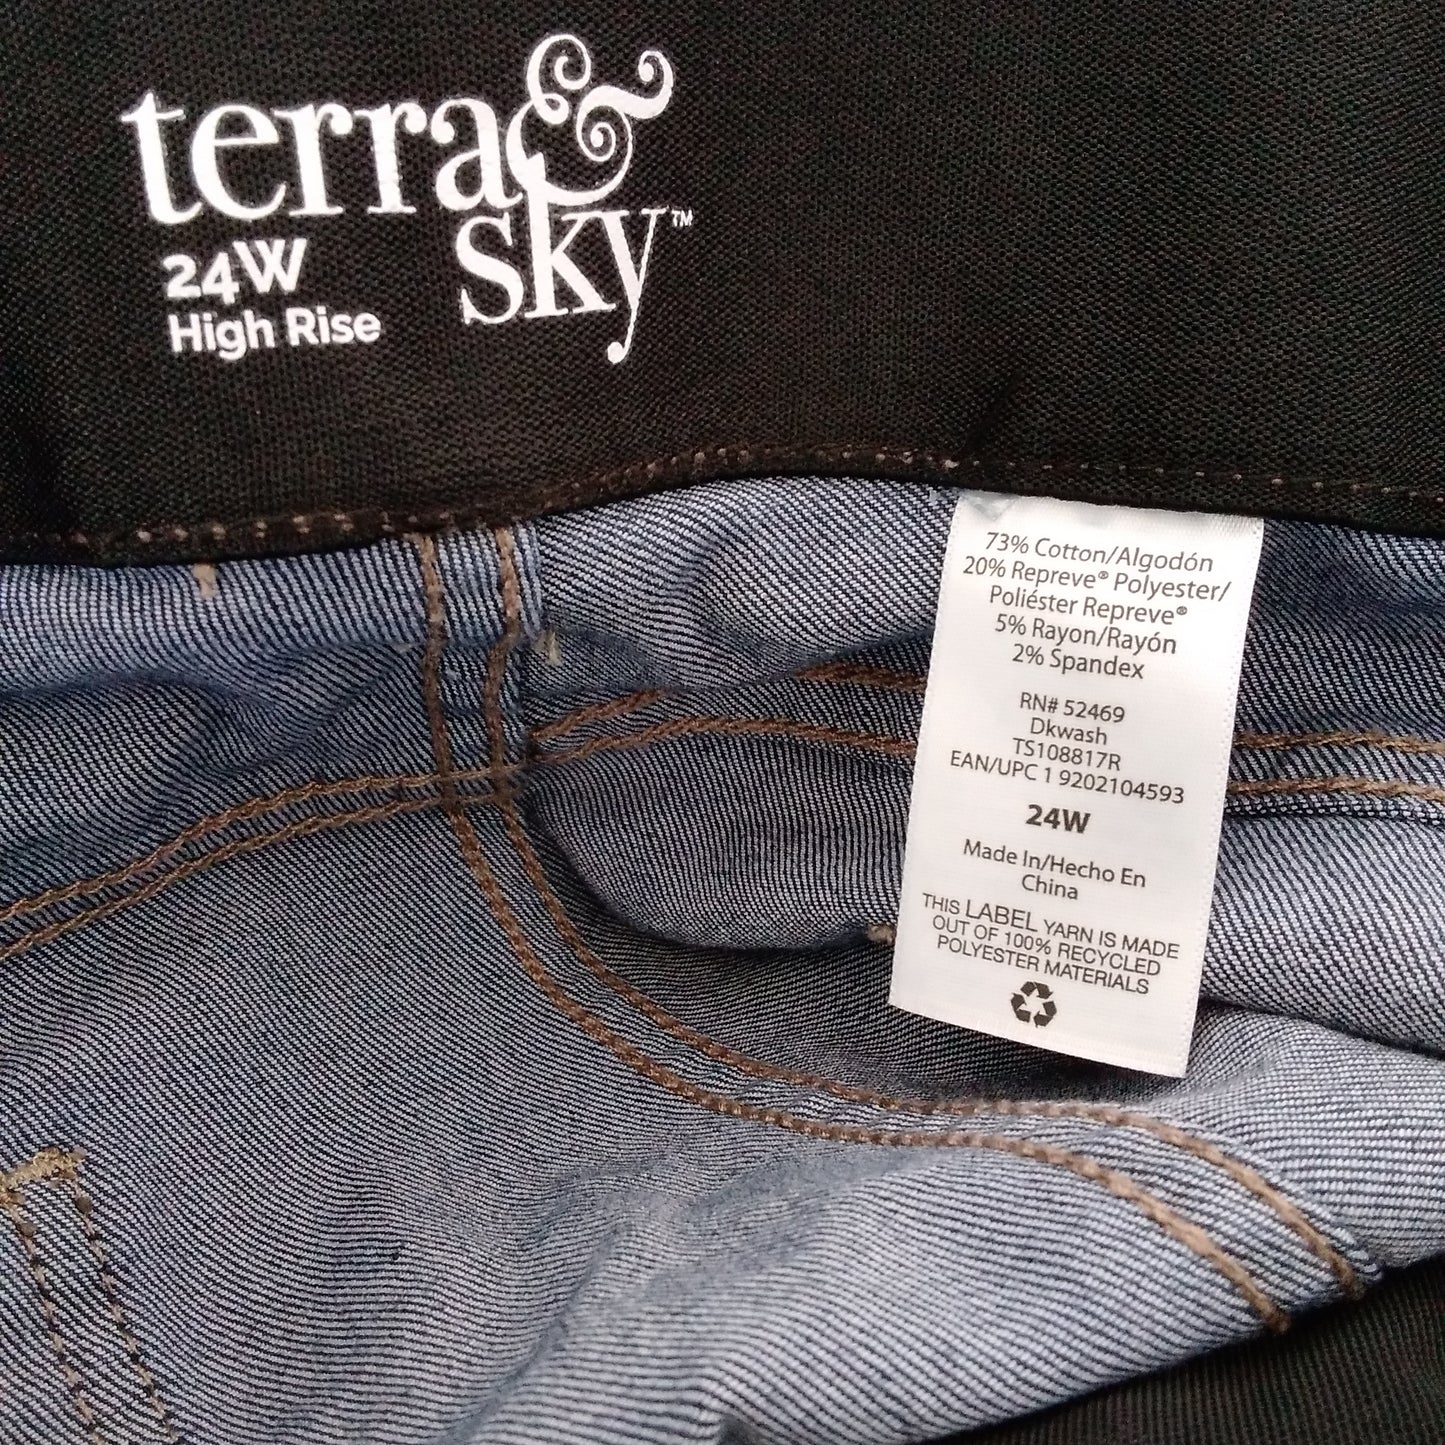 Terra & Sky Flex-Waist High Rise Jeans - Size 24W